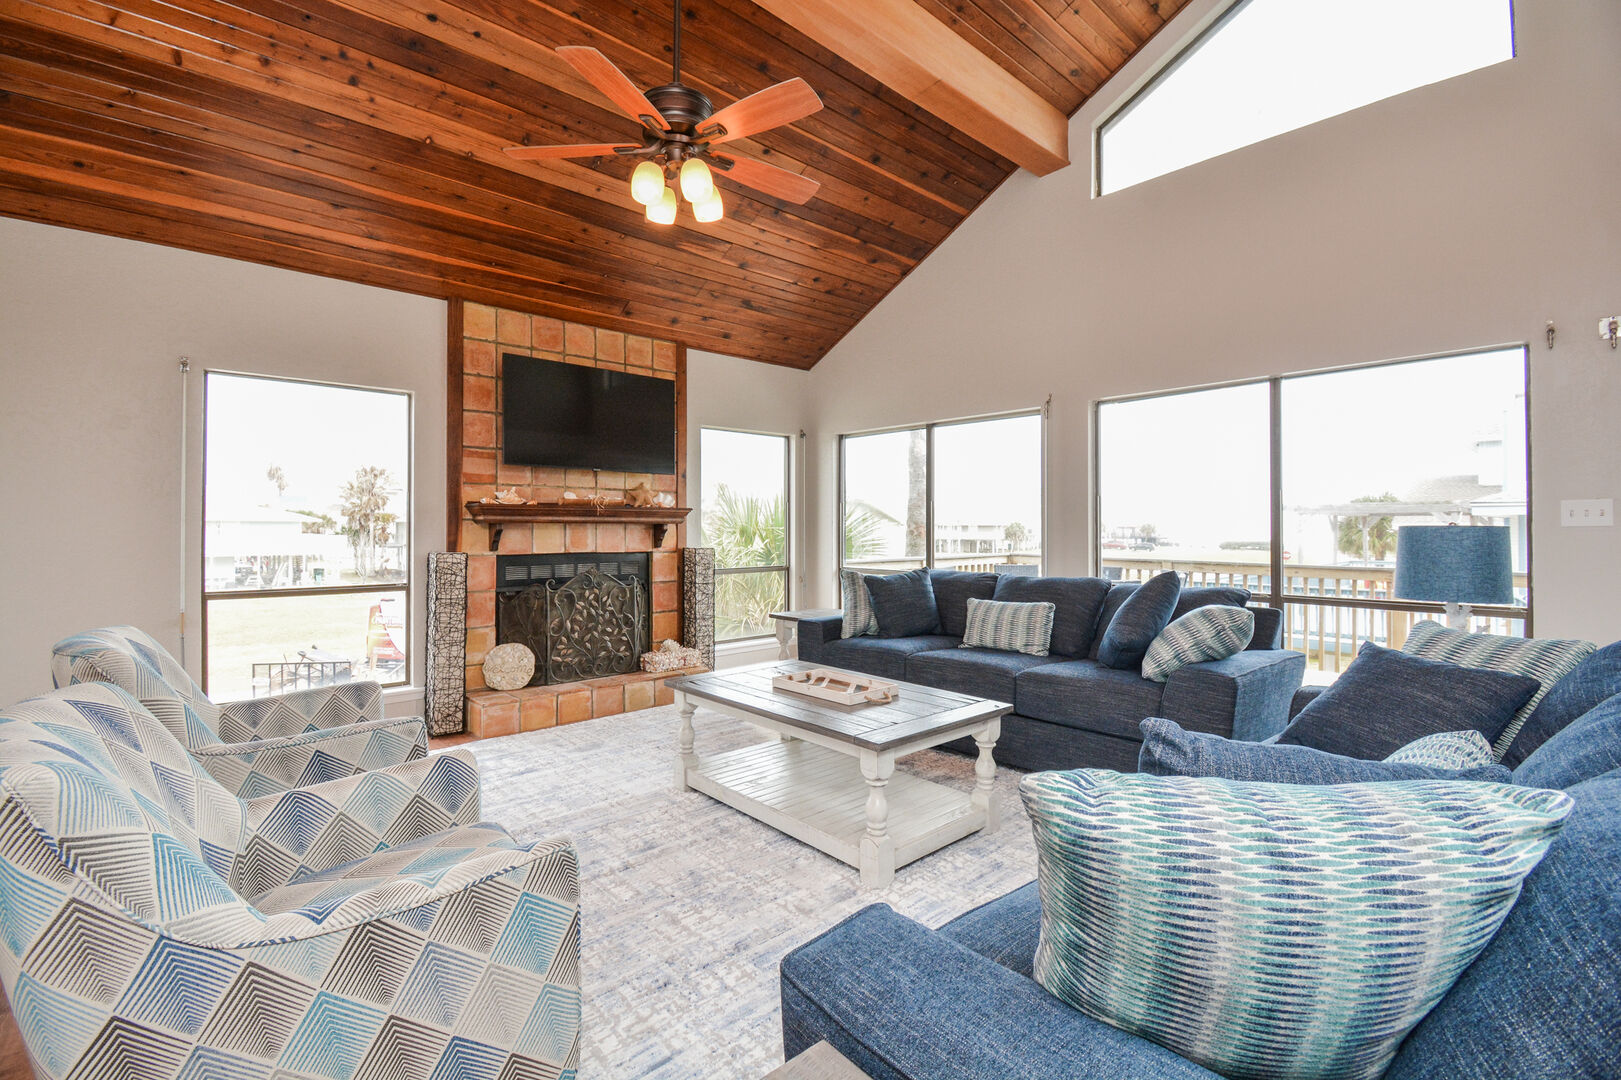 Create lasting memories in this living room paradise.  